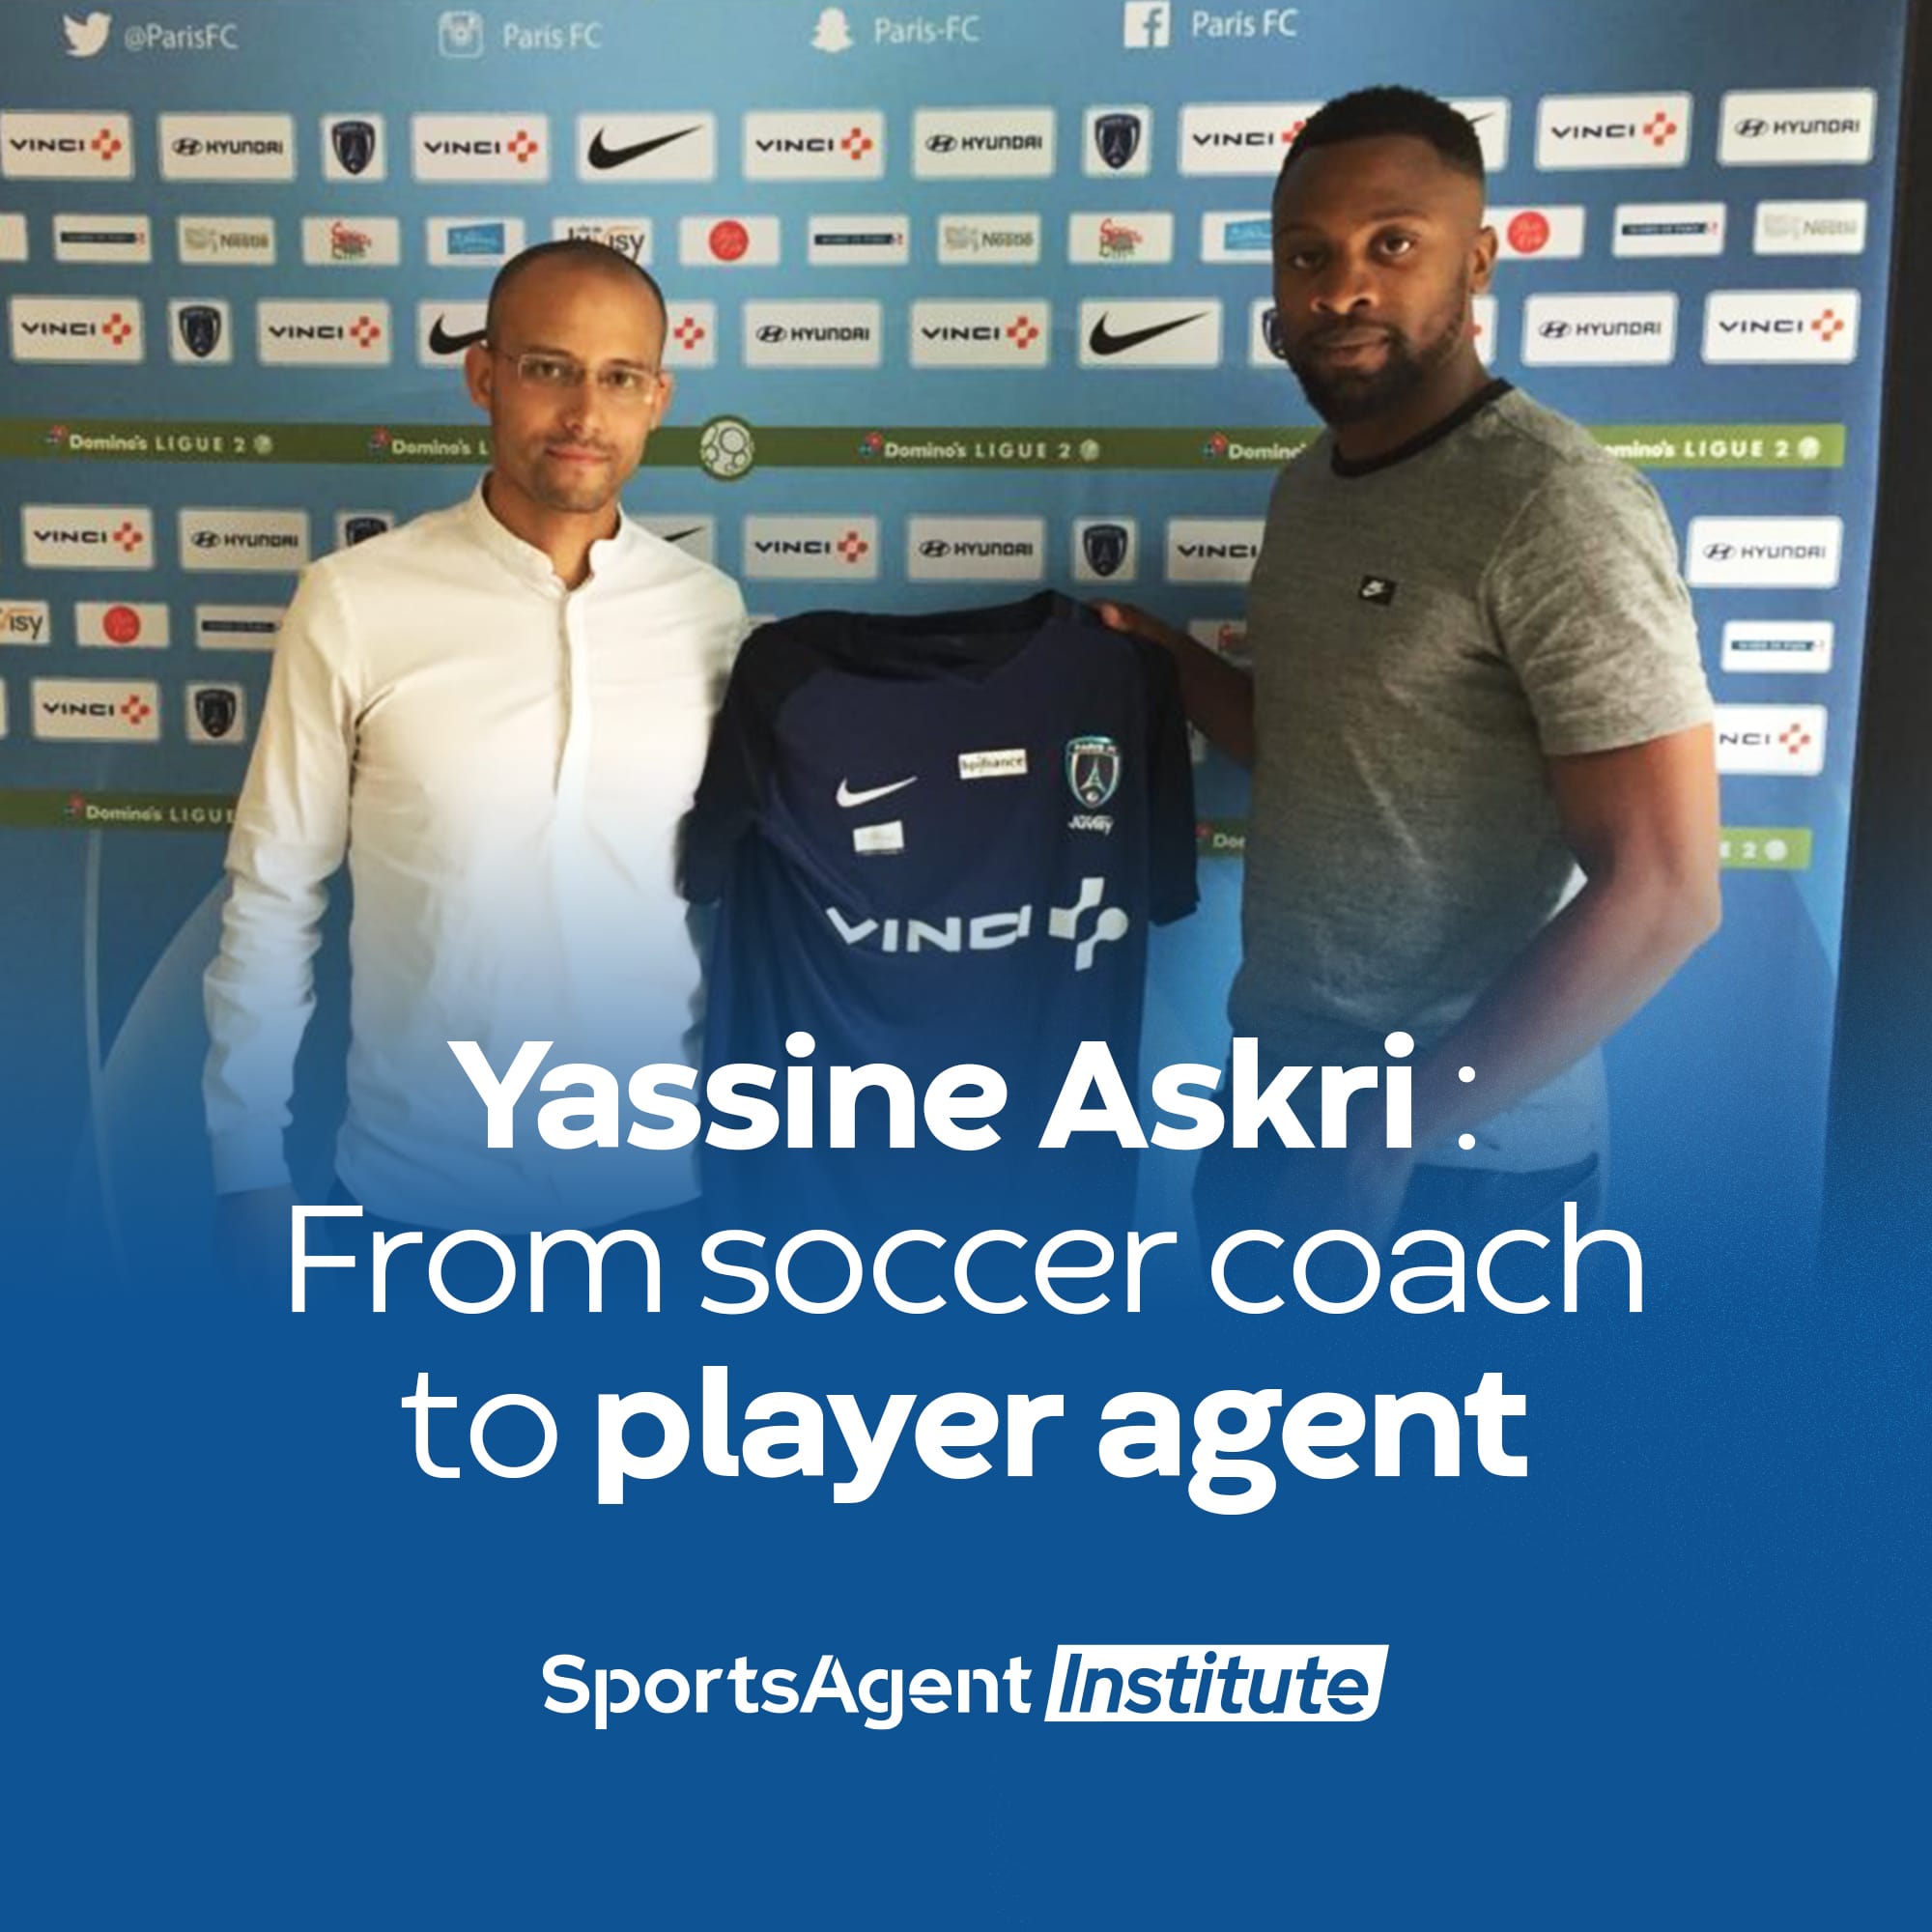 yassine-askri-soccer-coach-player-agent